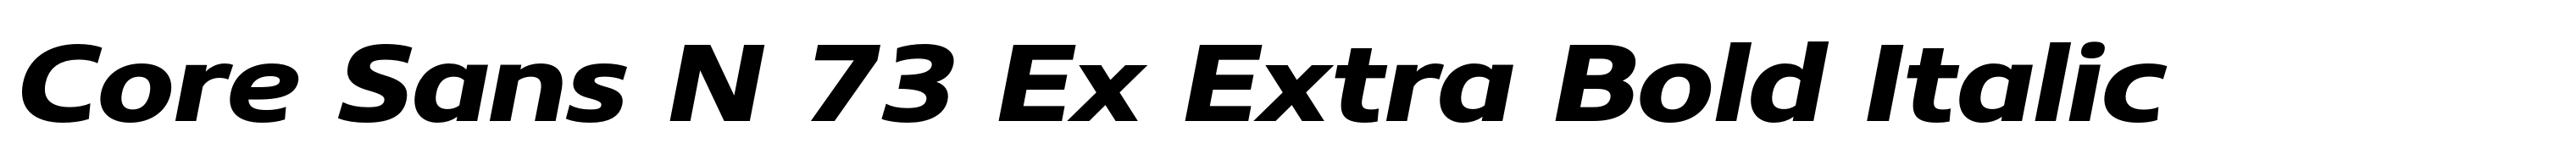 Core Sans N 73 Ex Extra Bold Italic